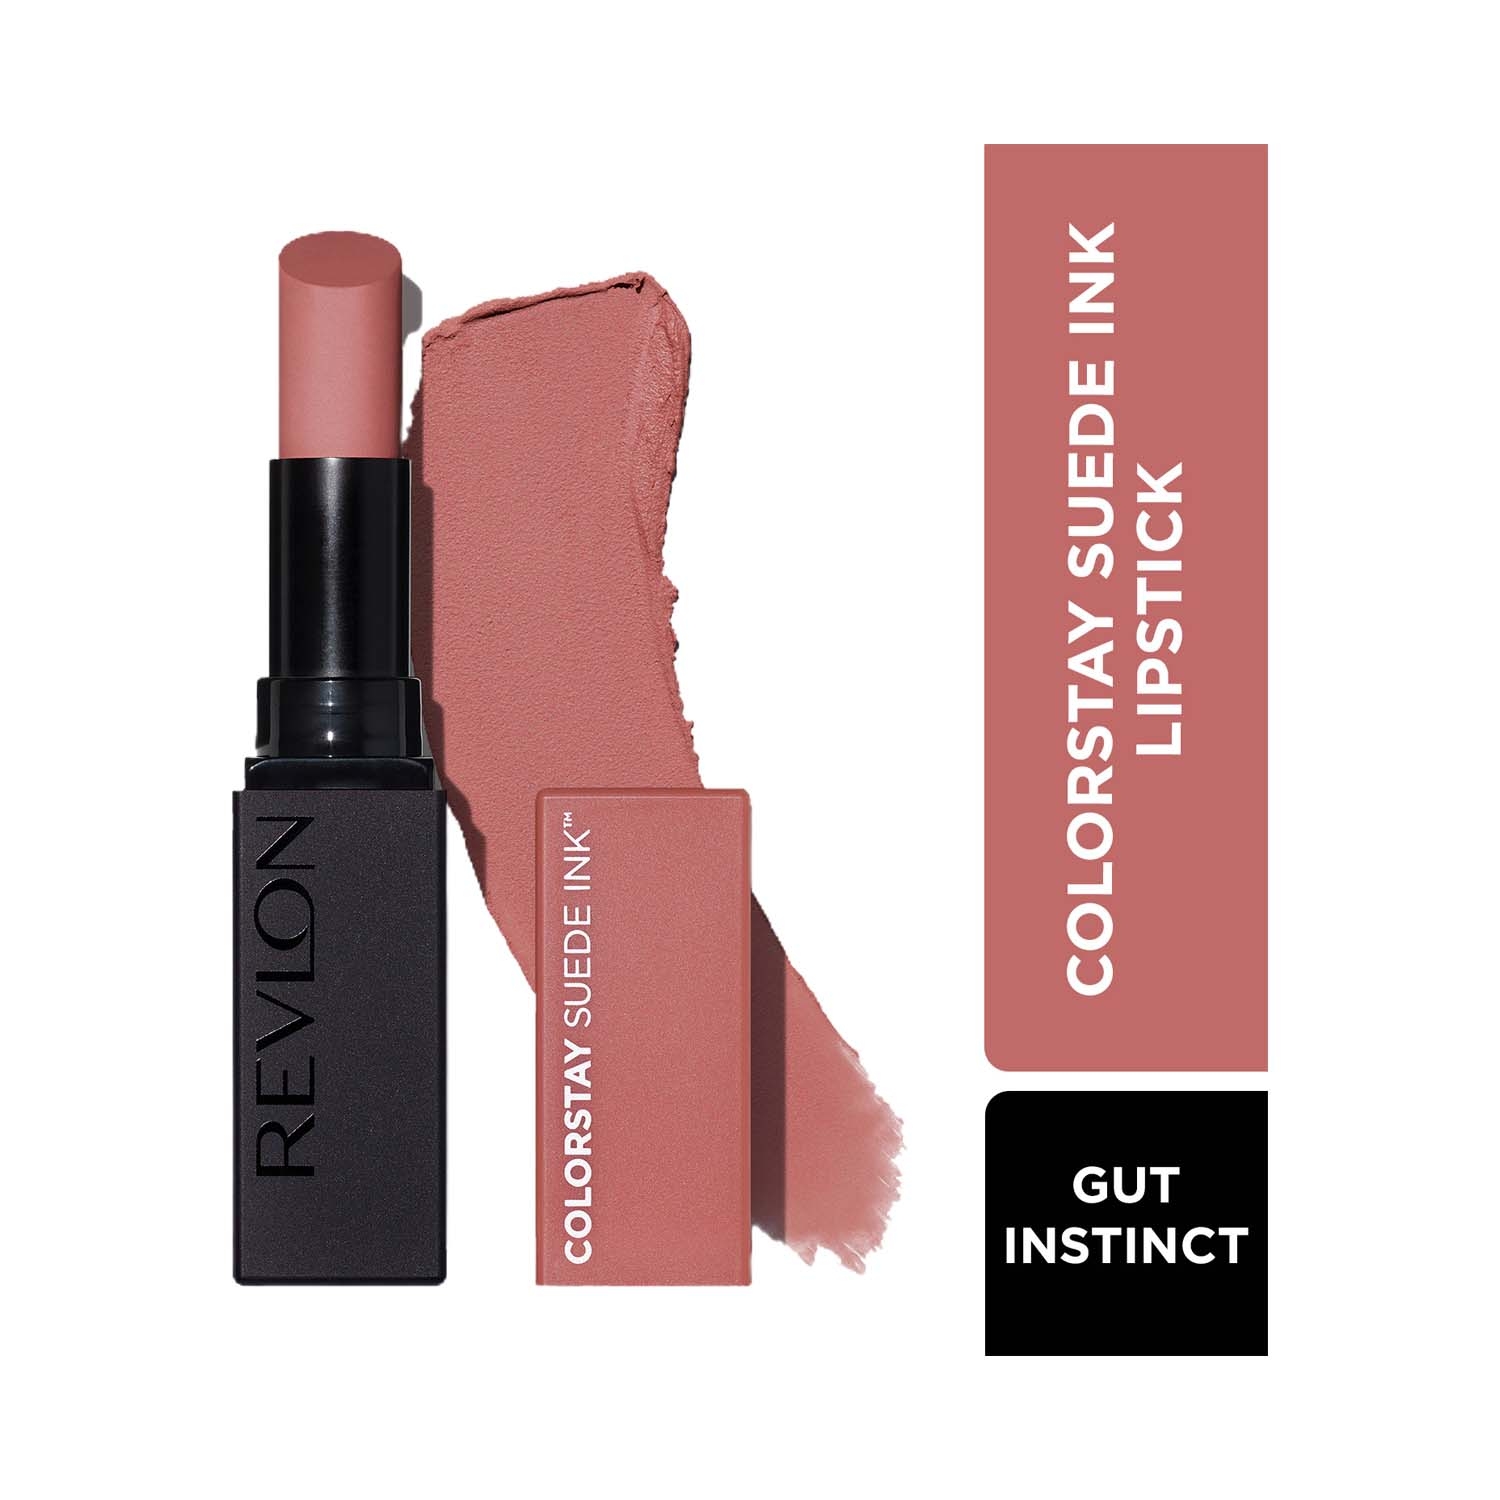 Revlon | Revlon Colorstay Suede Ink Lipstick - 001 Gut Instinct (2.5g)